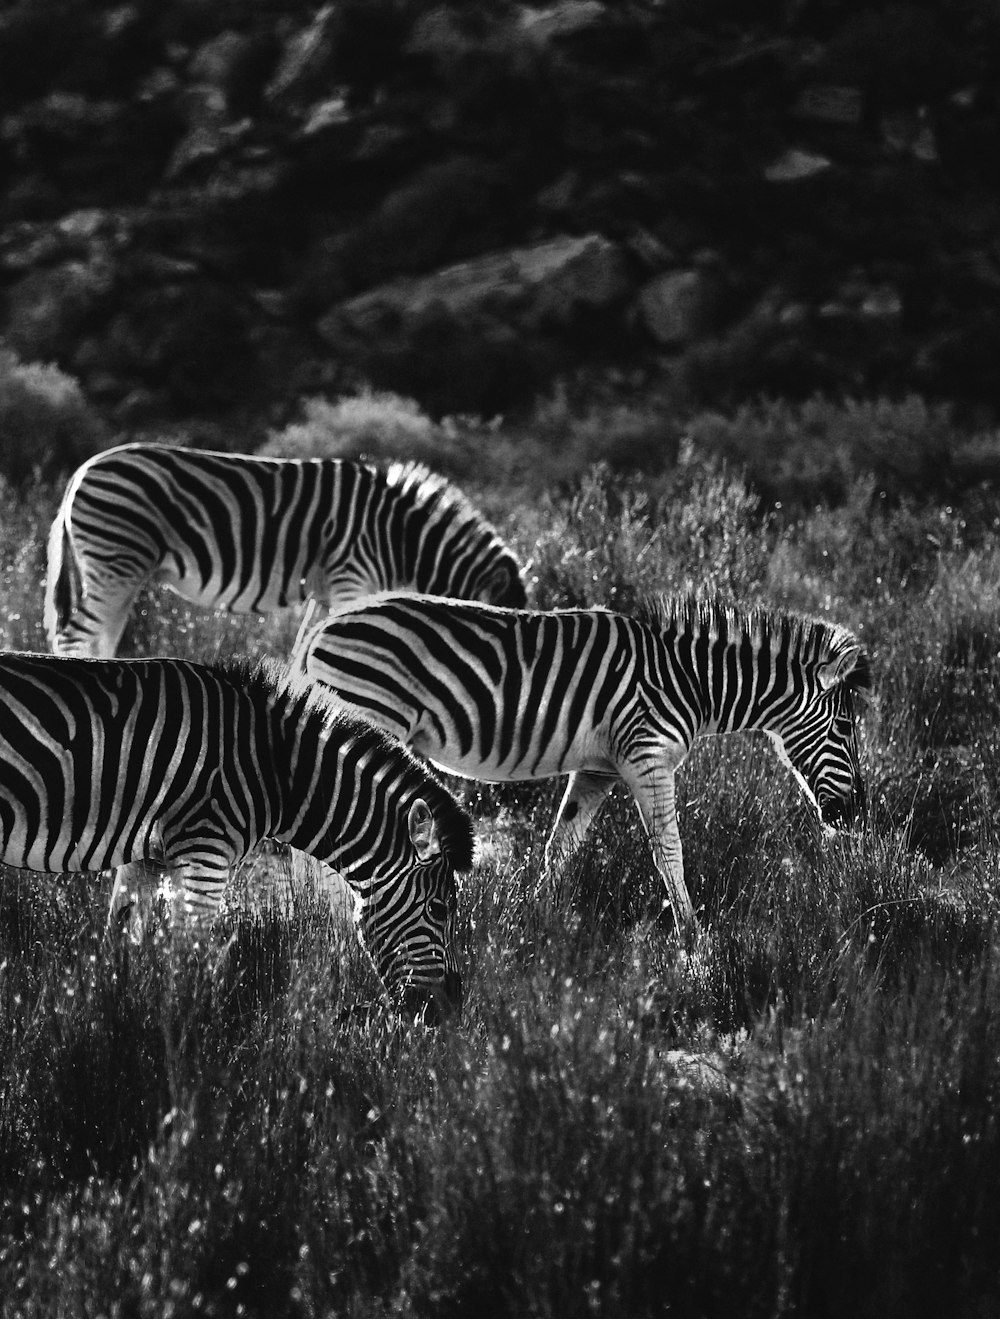 grayscale photo of zebra on grass field